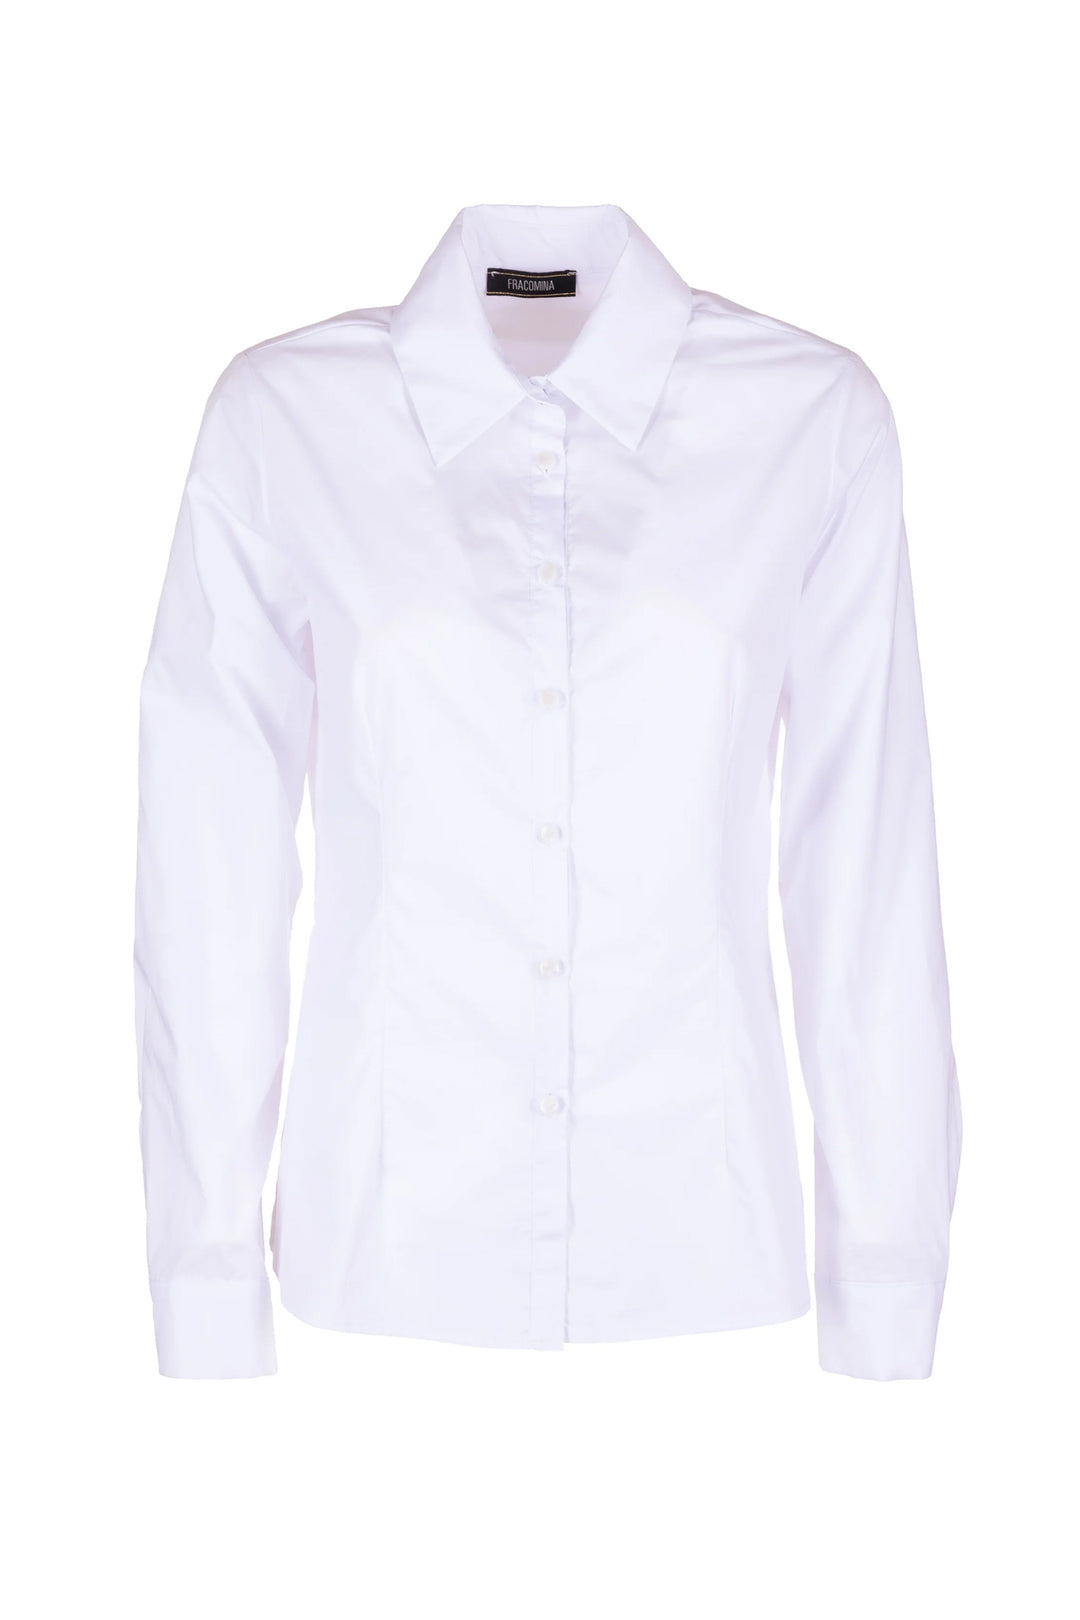 FRACOMINA Camicia regular bianca in popeline di cotone - Mancinelli 1954